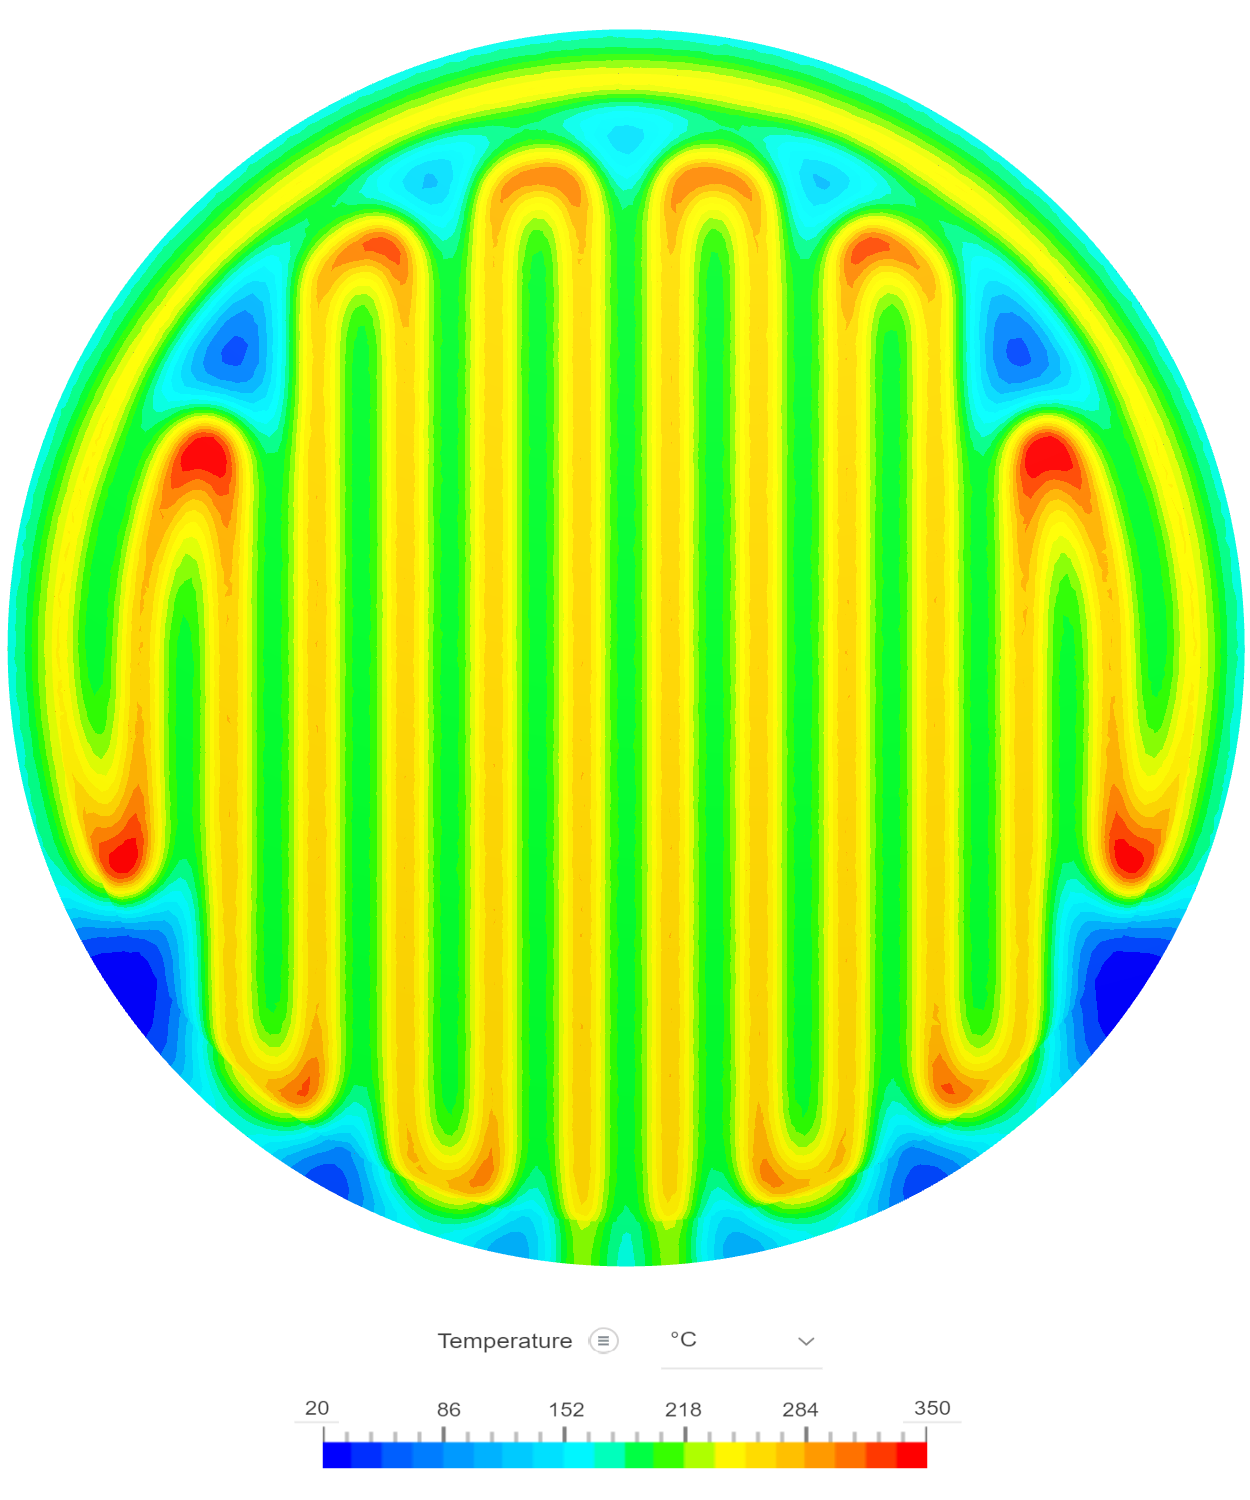 Heating element image